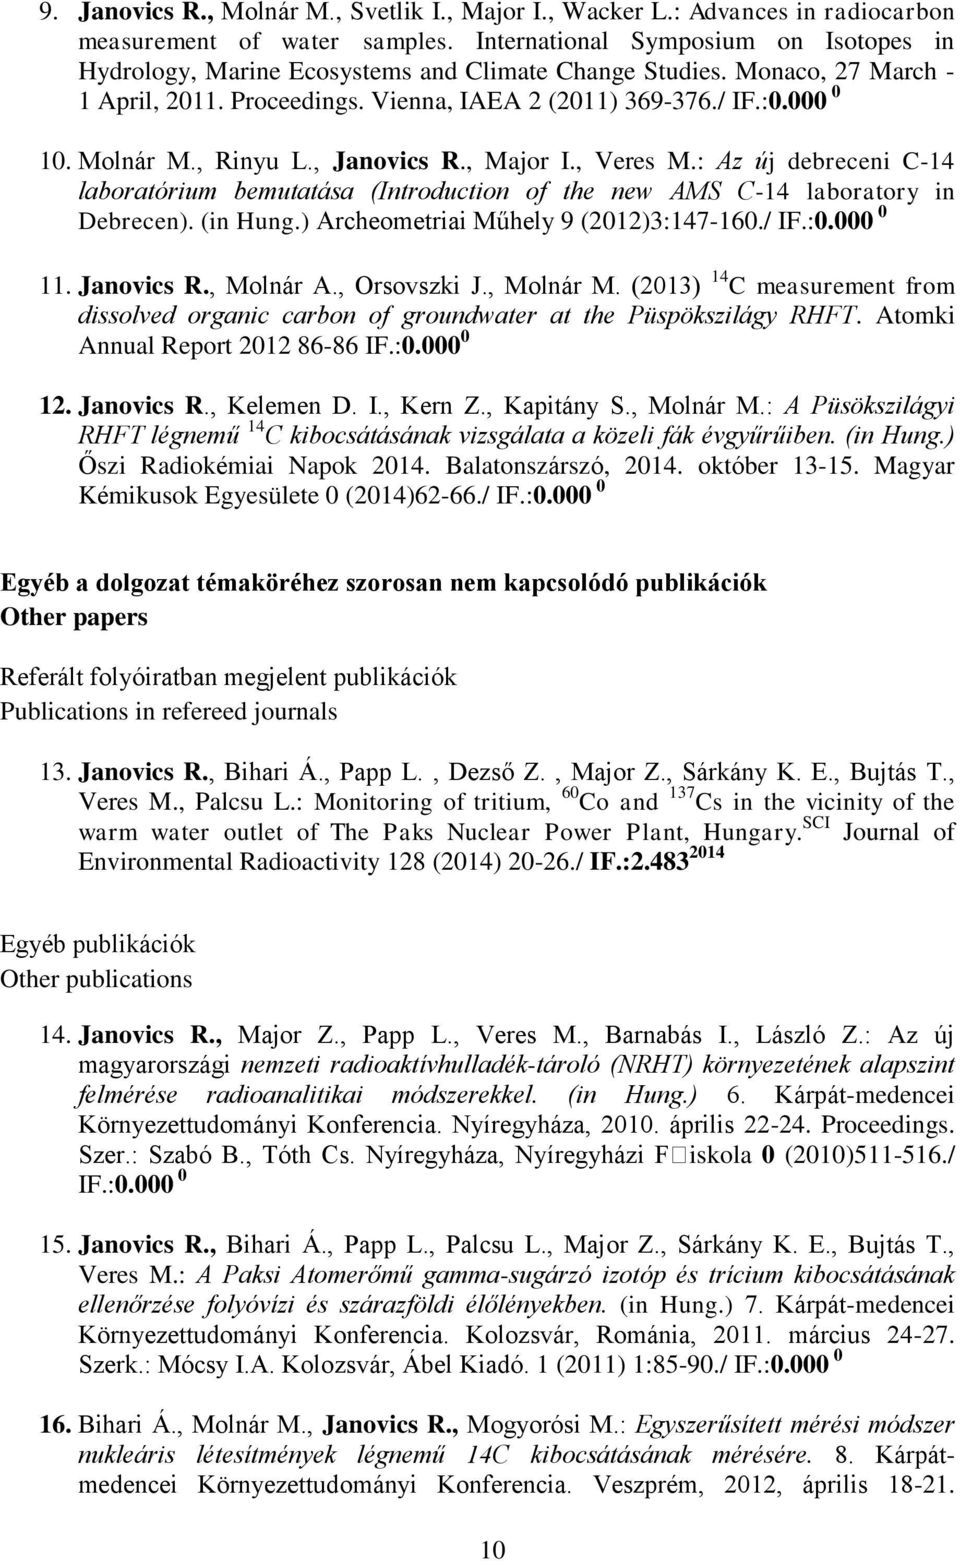 , Rinyu L., Janovics R., Major I., Veres M.: Az új debreceni C-14 laboratórium bemutatása (Introduction of the new AMS C-14 laboratory in Debrecen). (in Hung.) Archeometriai Műhely 9 (2012)3:147-160.